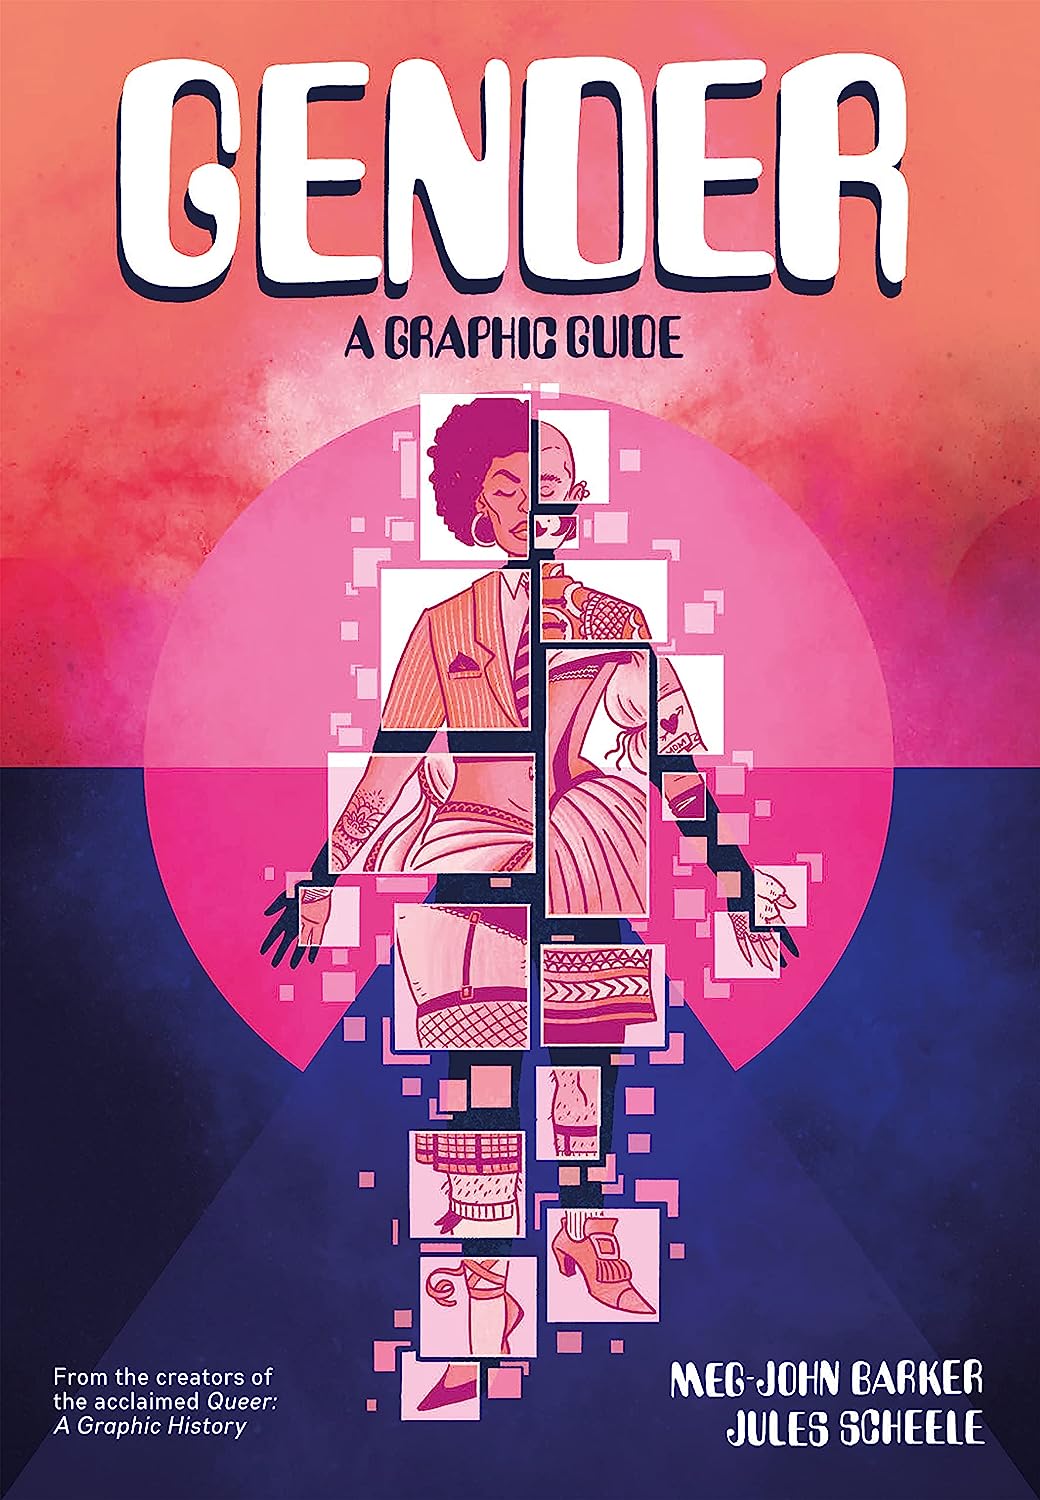 The front cover of Gender: A Graphic Guide - Meg John Barker, Julia Shceele.